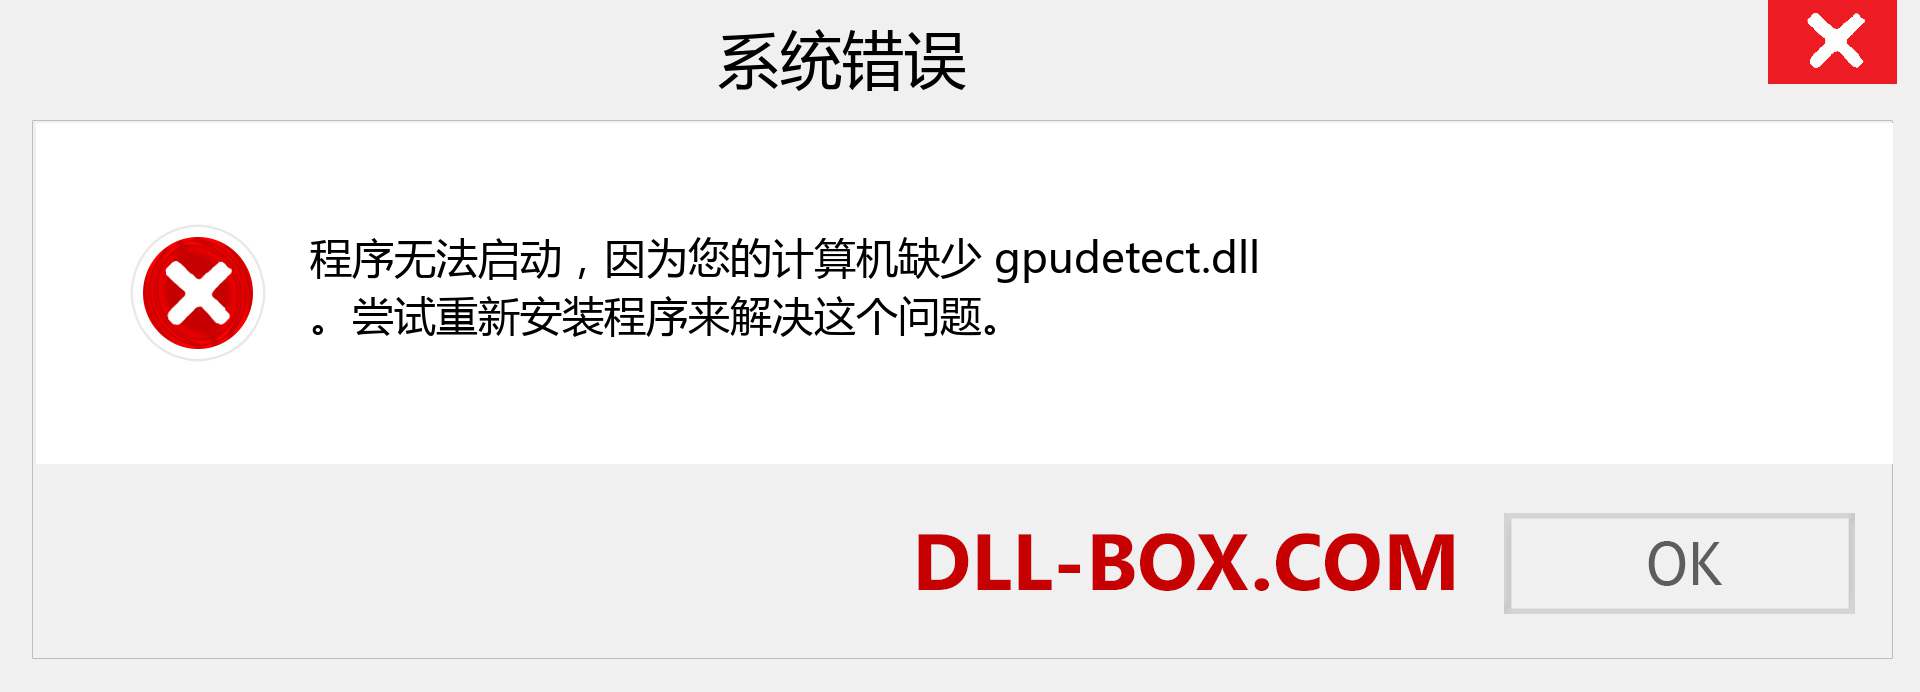 gpudetect.dll 文件丢失？。 适用于 Windows 7、8、10 的下载 - 修复 Windows、照片、图像上的 gpudetect dll 丢失错误